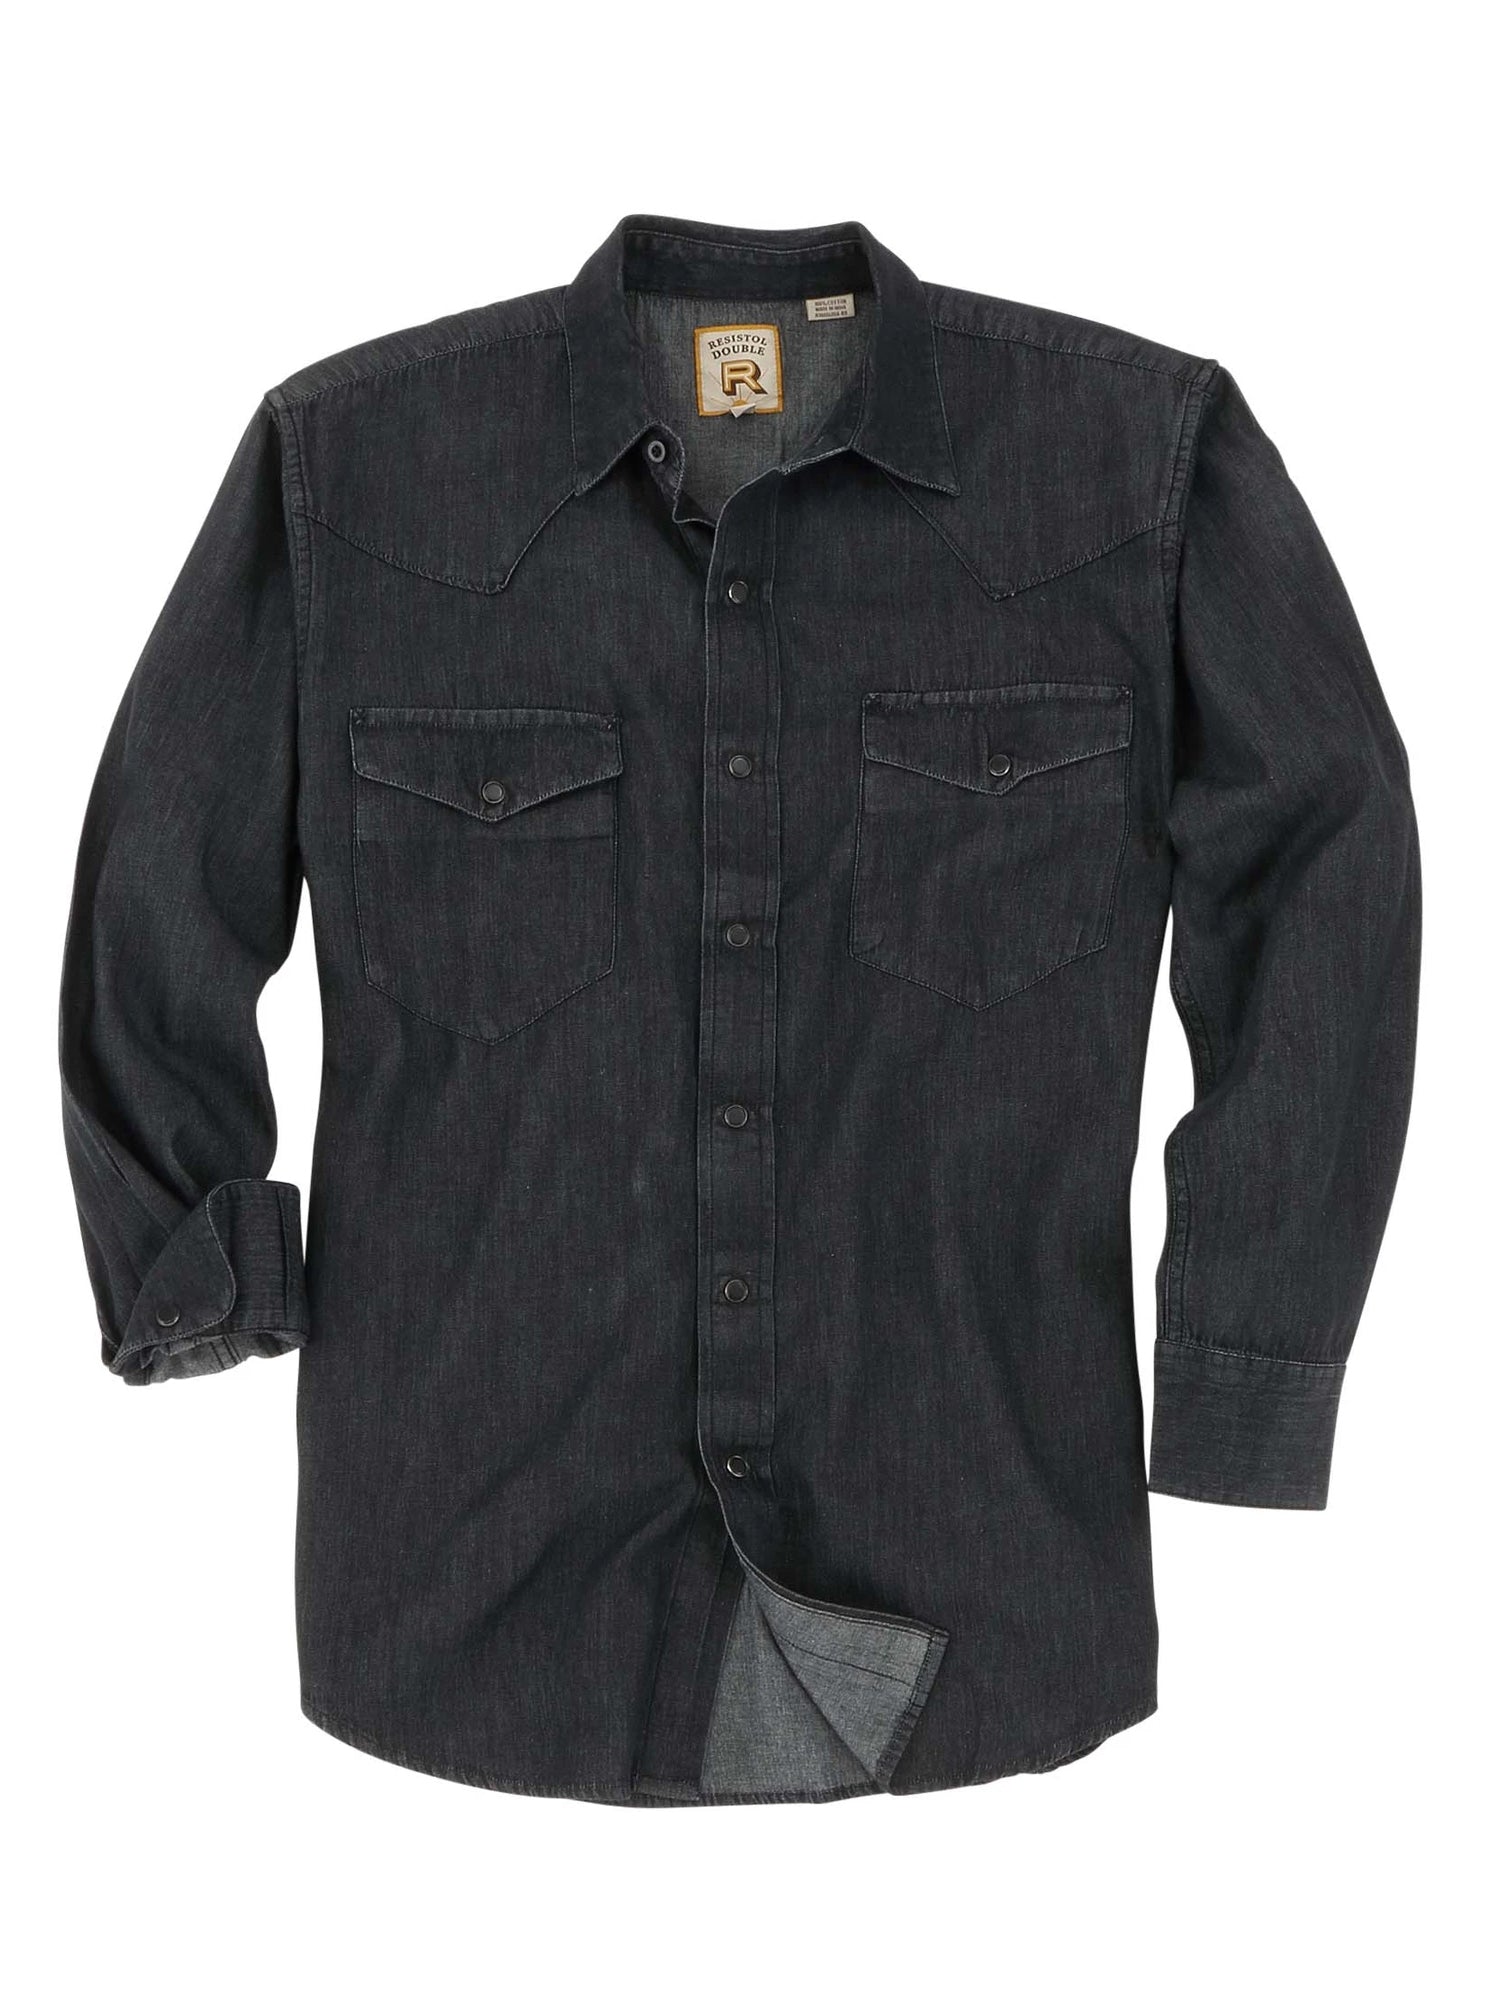 Resistol 100% Cotton Denim Shirt in Black